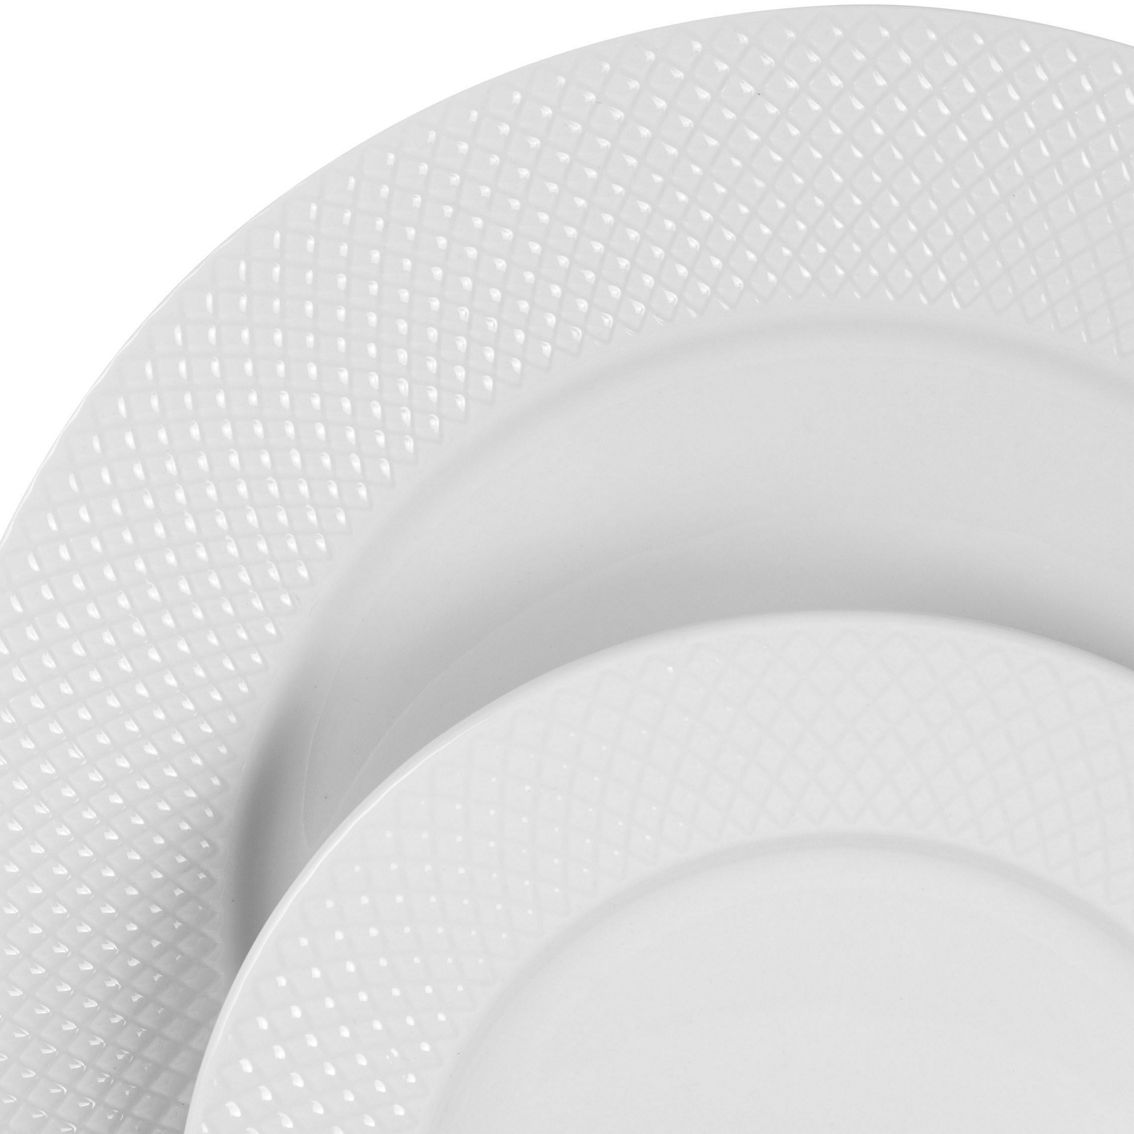 Elama Maisy 18 Piece Round Porcelain Dinnerware Set in White - Image 2 of 5